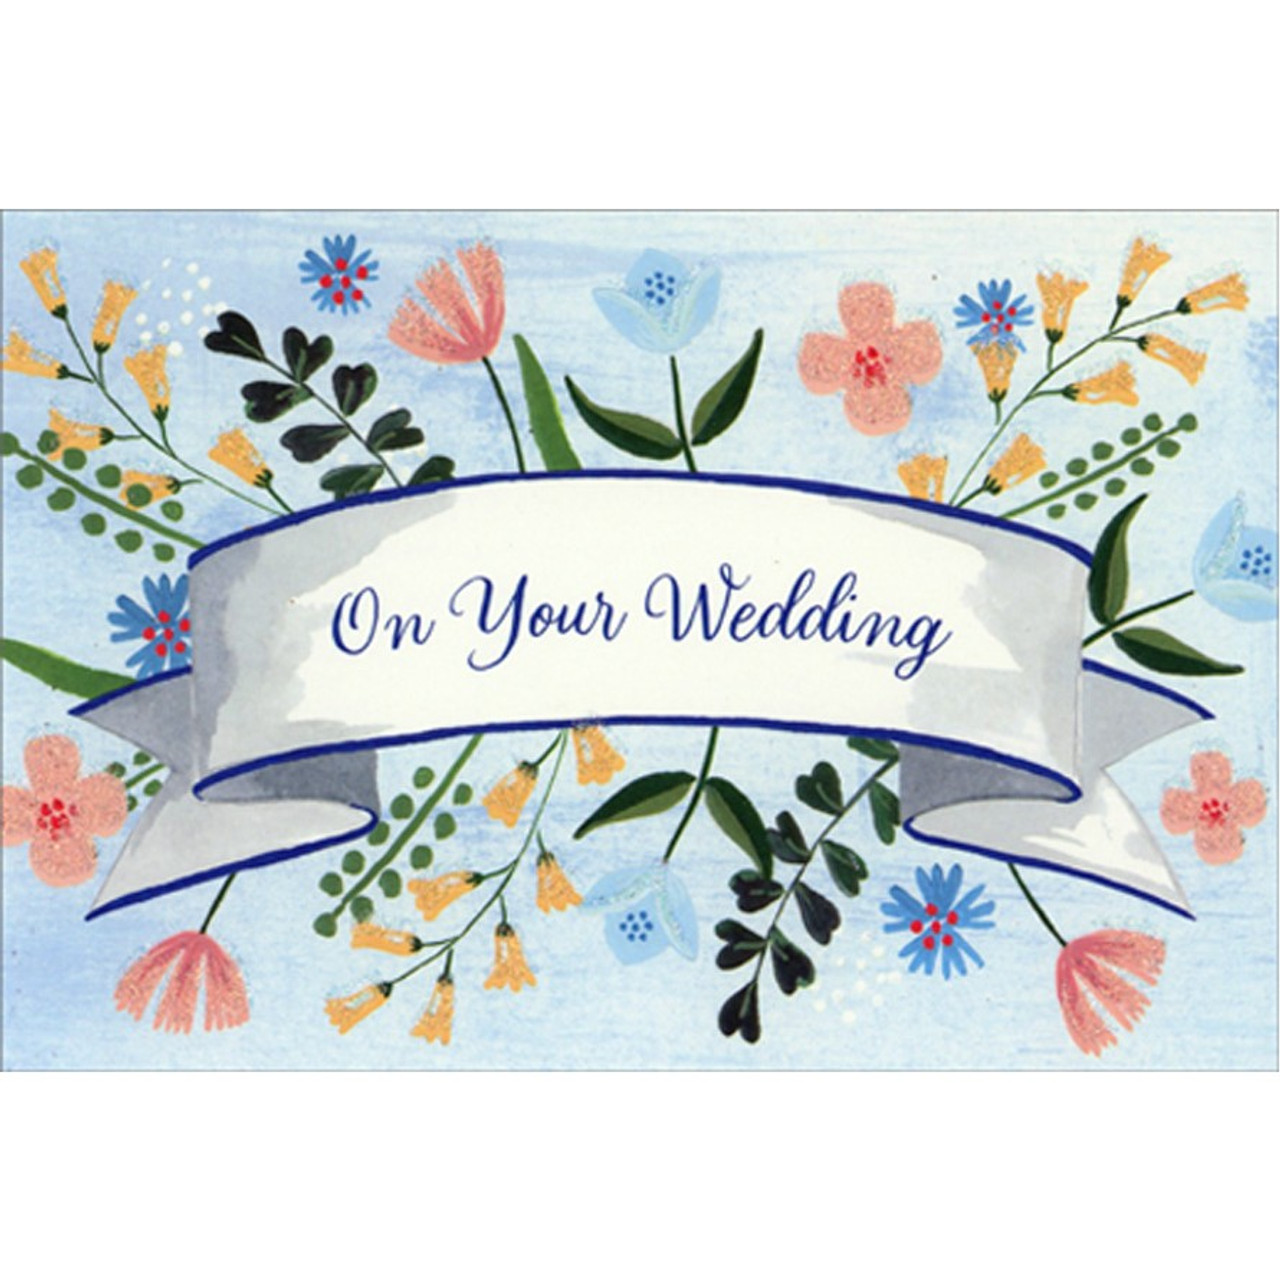 wedding congratulations banner